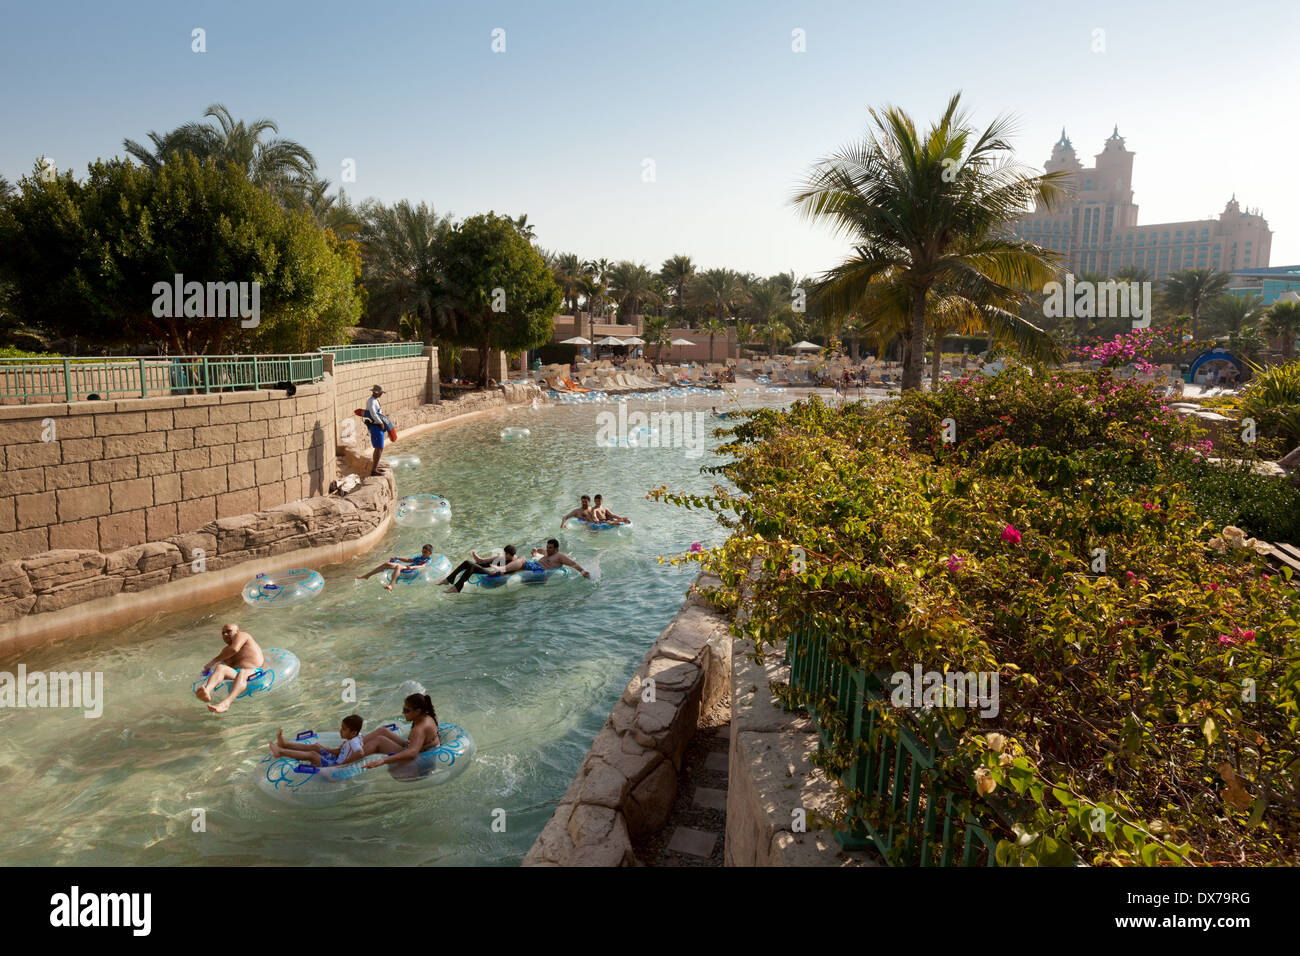 Aquaventure waterpark and the Hotel Atlantis, the Palm, Dubai UAE, United Arab Emirates, Middle East Stock Photo